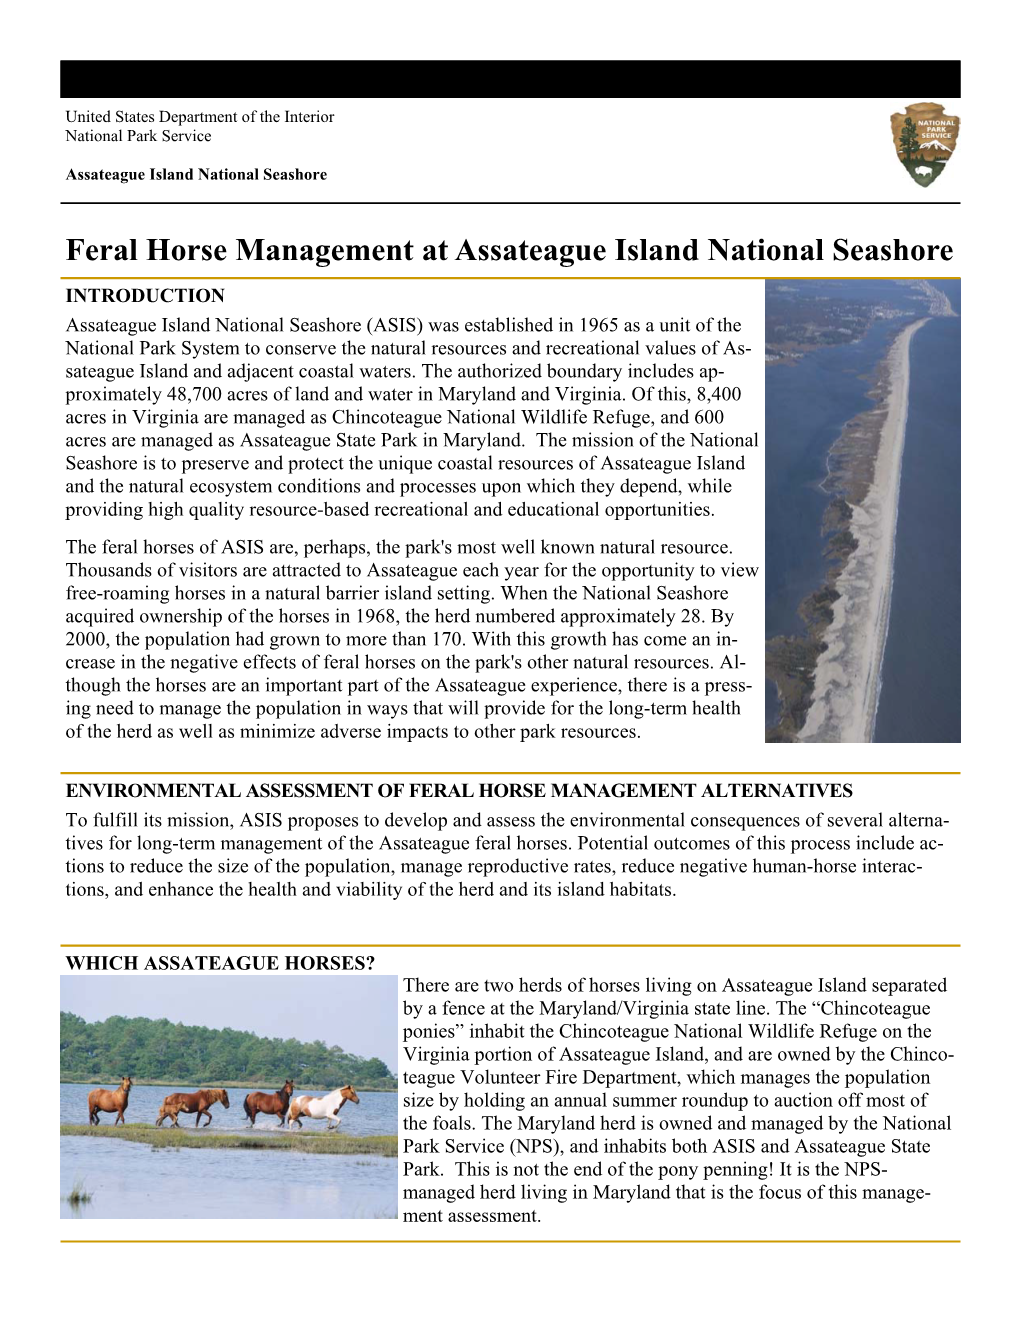 Feral Horse Management at Assateague Island National Seashore